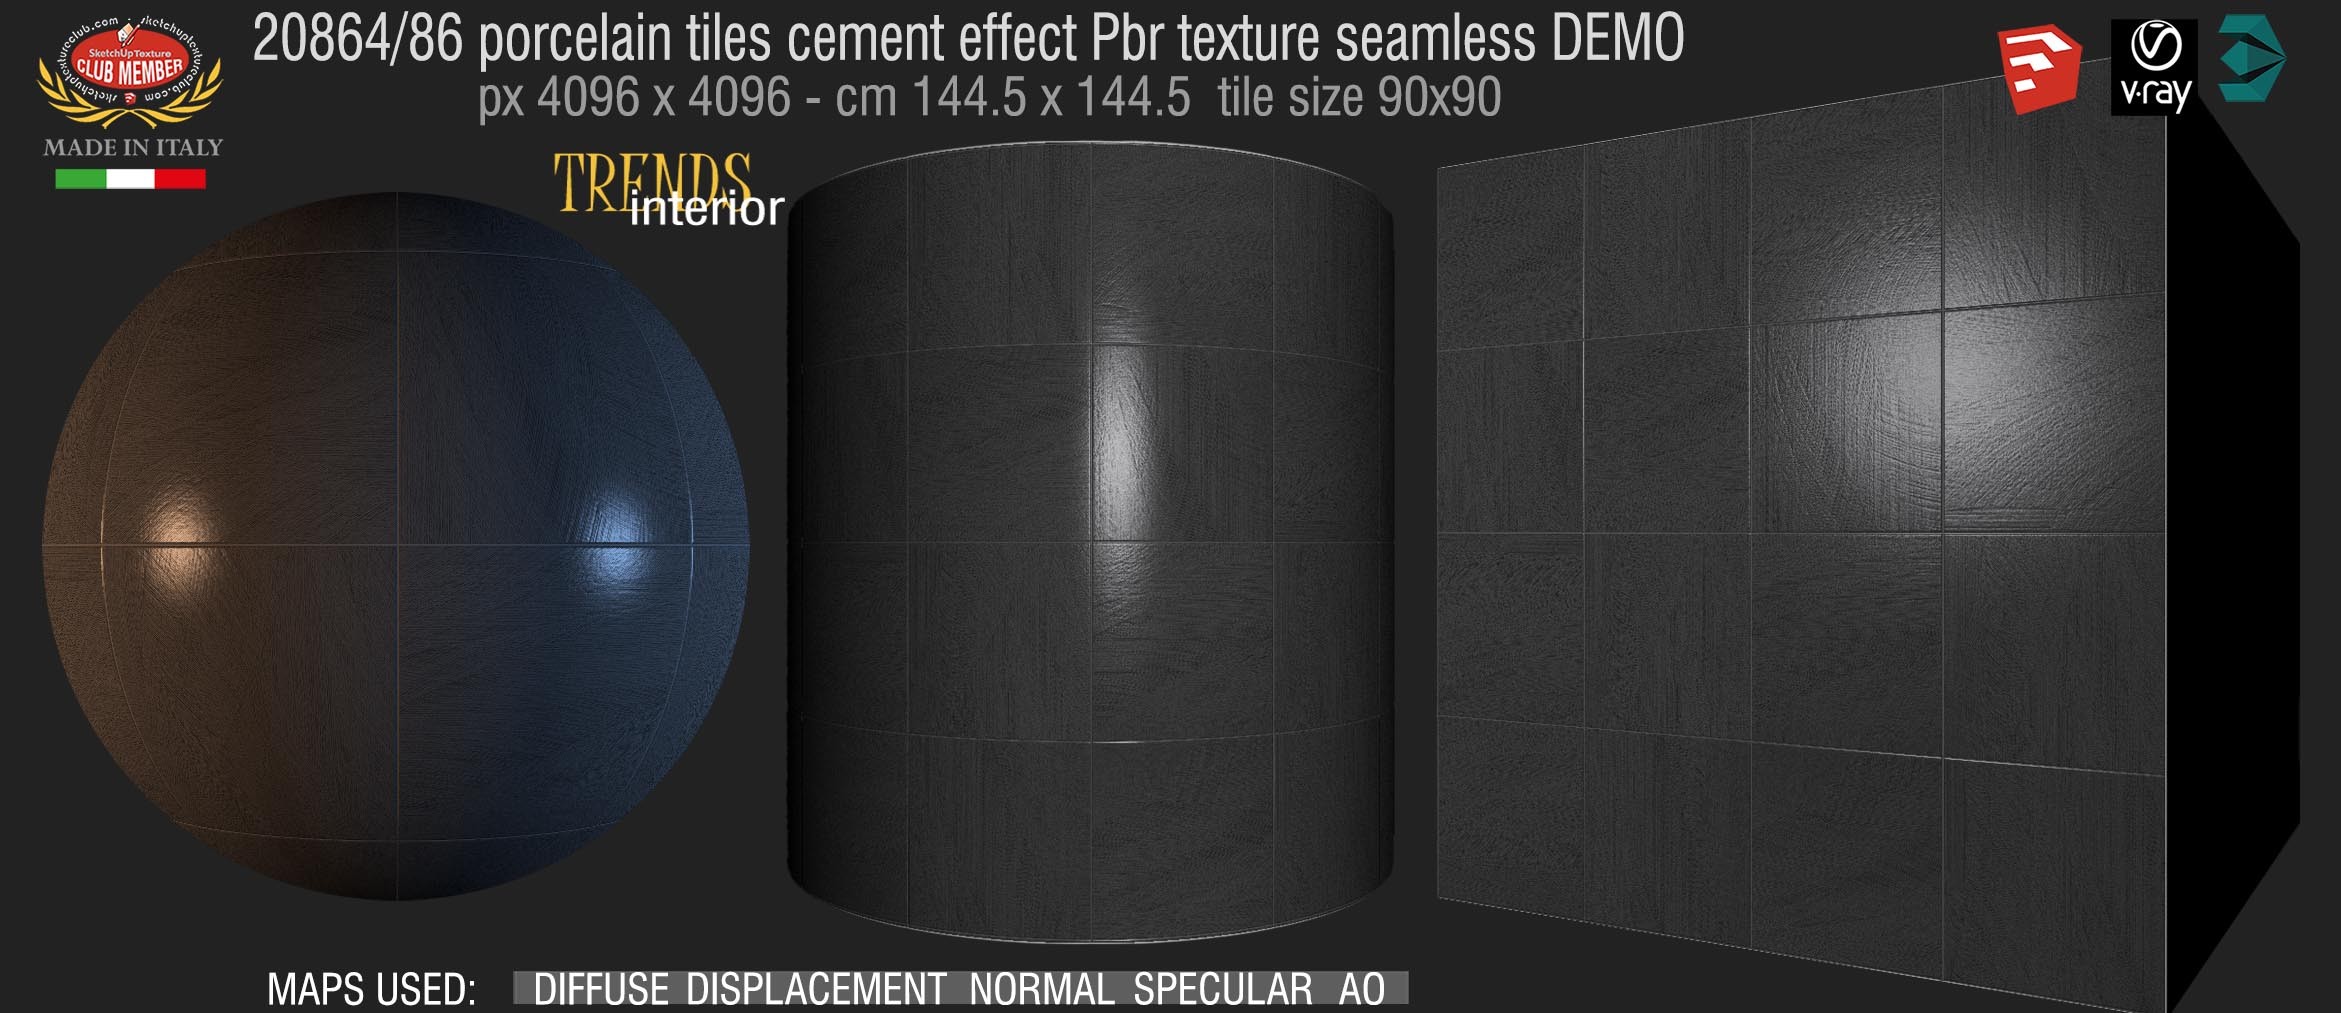 20684 HR Porcelain tiles cement effect pbr texture seamless + maps DEMO